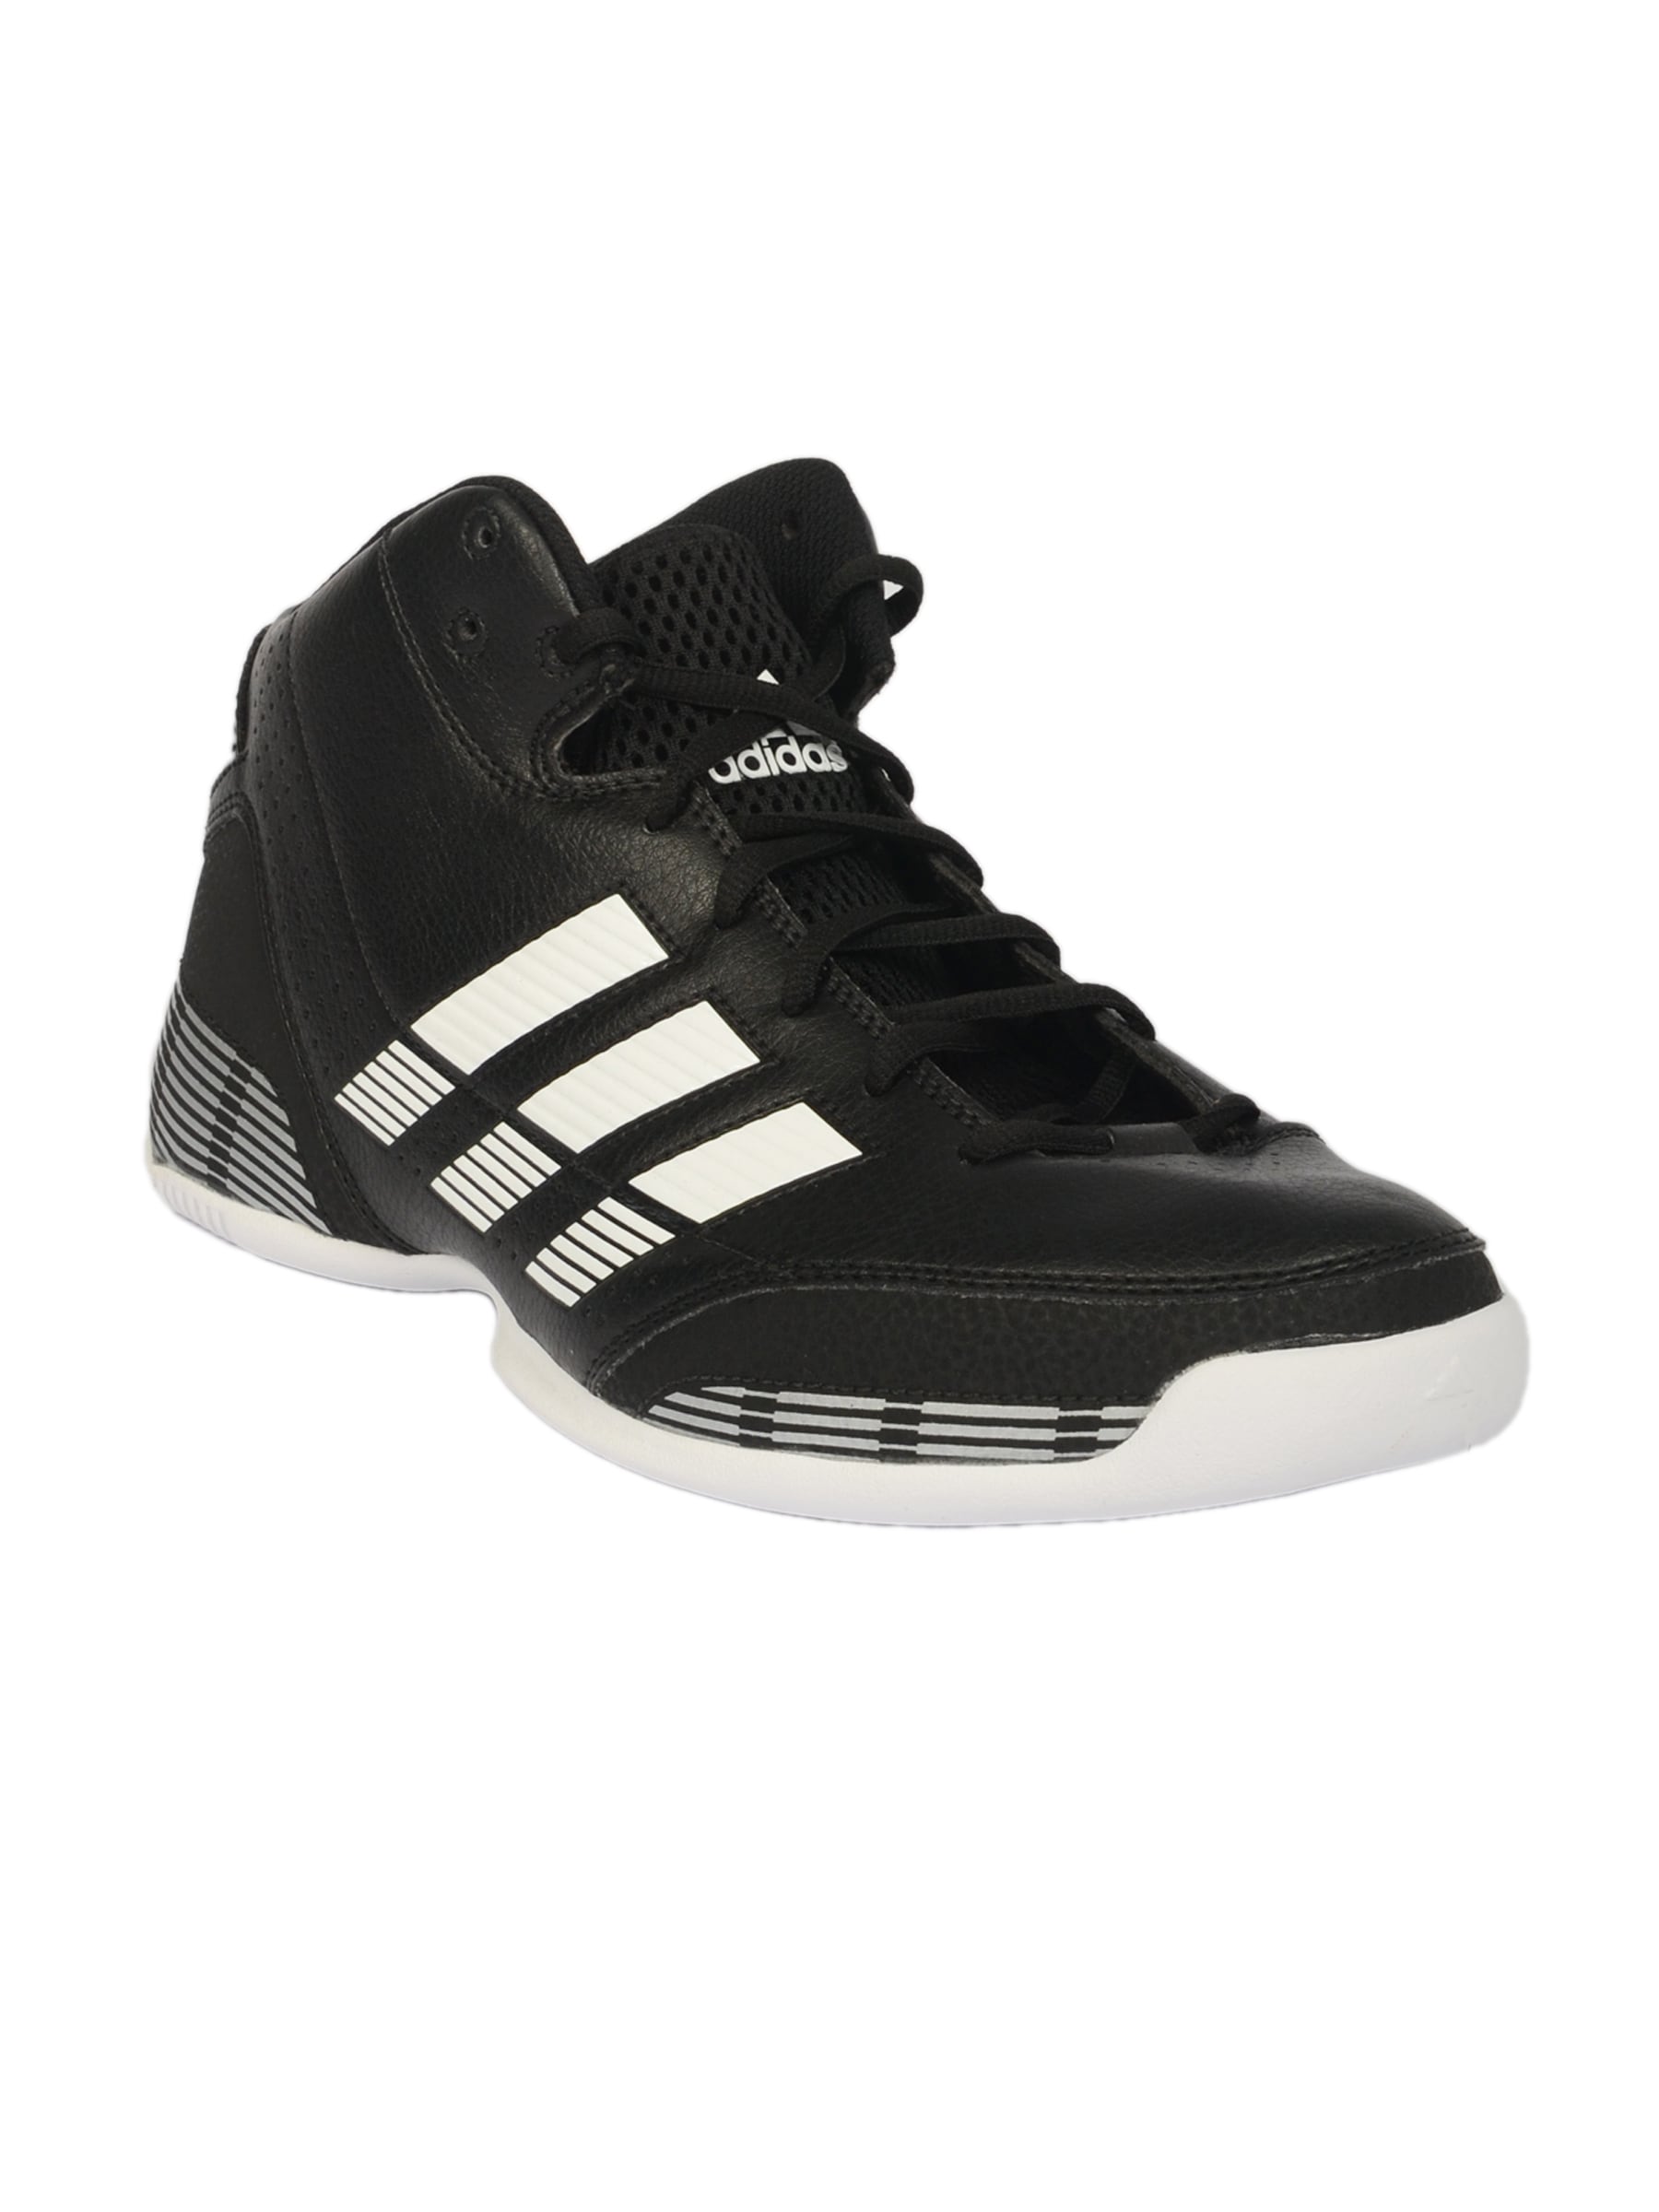 ADIDAS Men 3 Series Light Black Sports Shoes